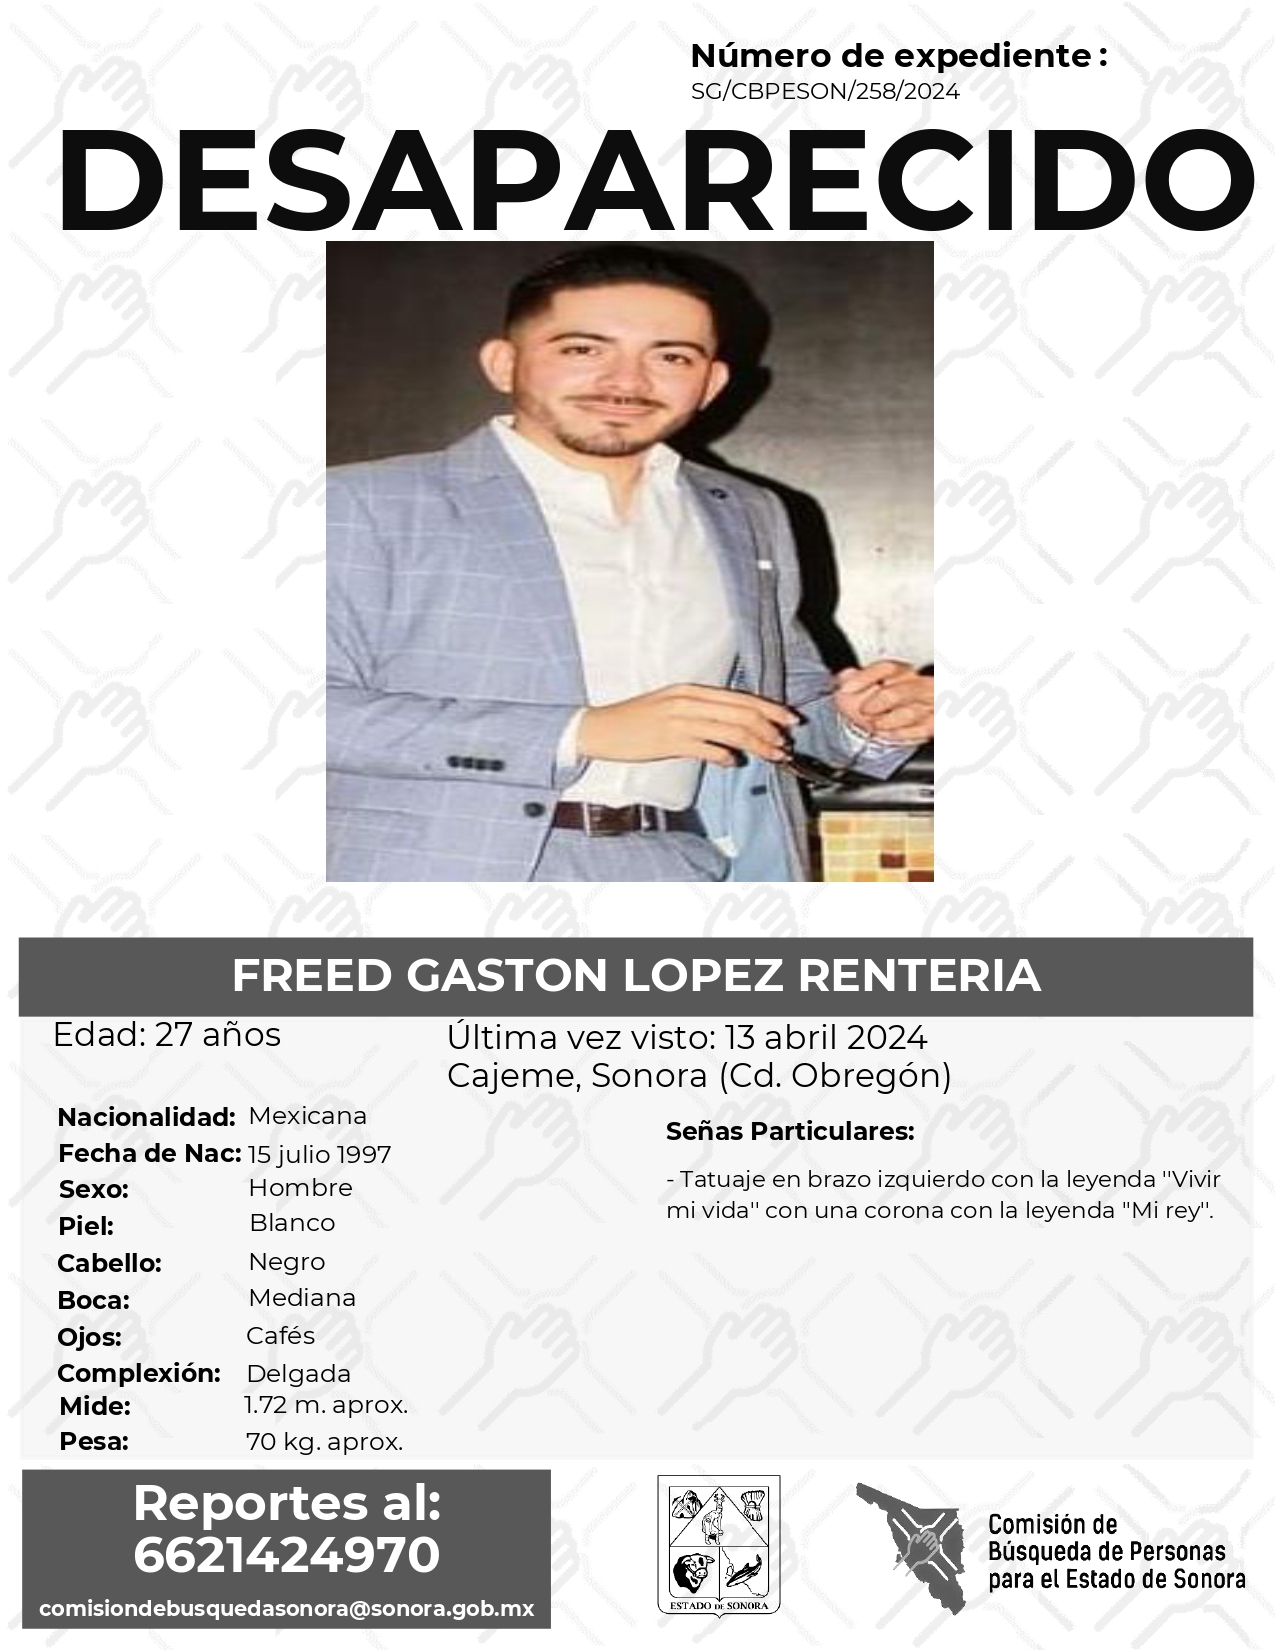 FREED GASTON LOPEZ RENTERIA - DESAPARECIDO